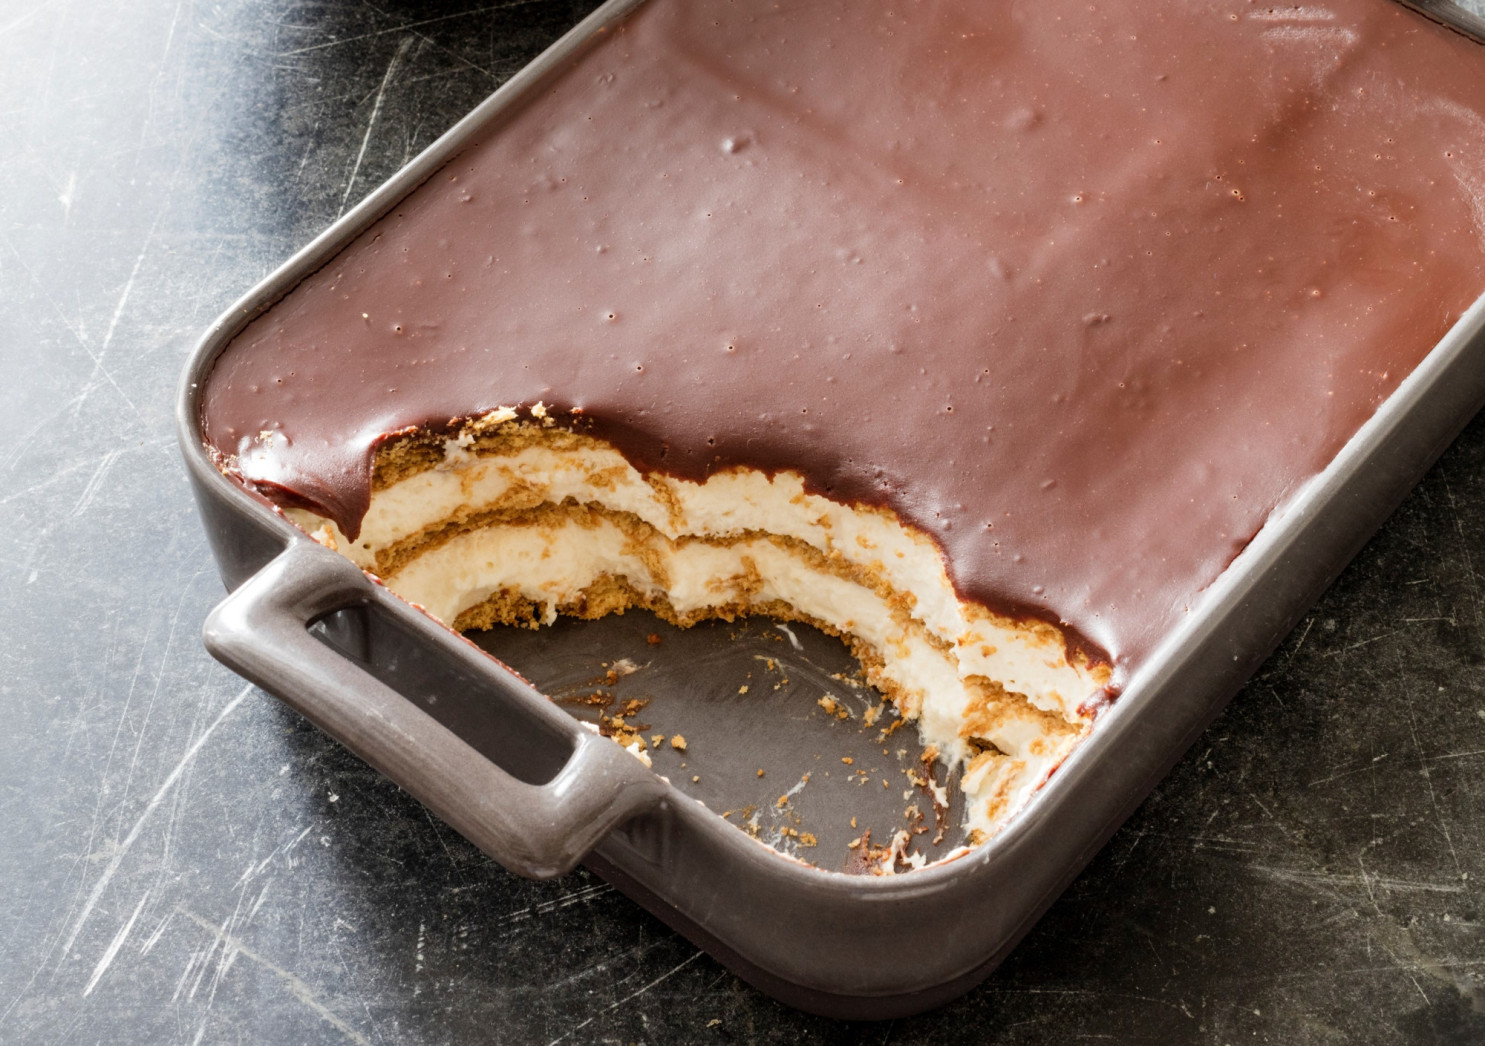 Icebox cake recipe: America’s Test Kitchen’s Chocolate Eclair Cake